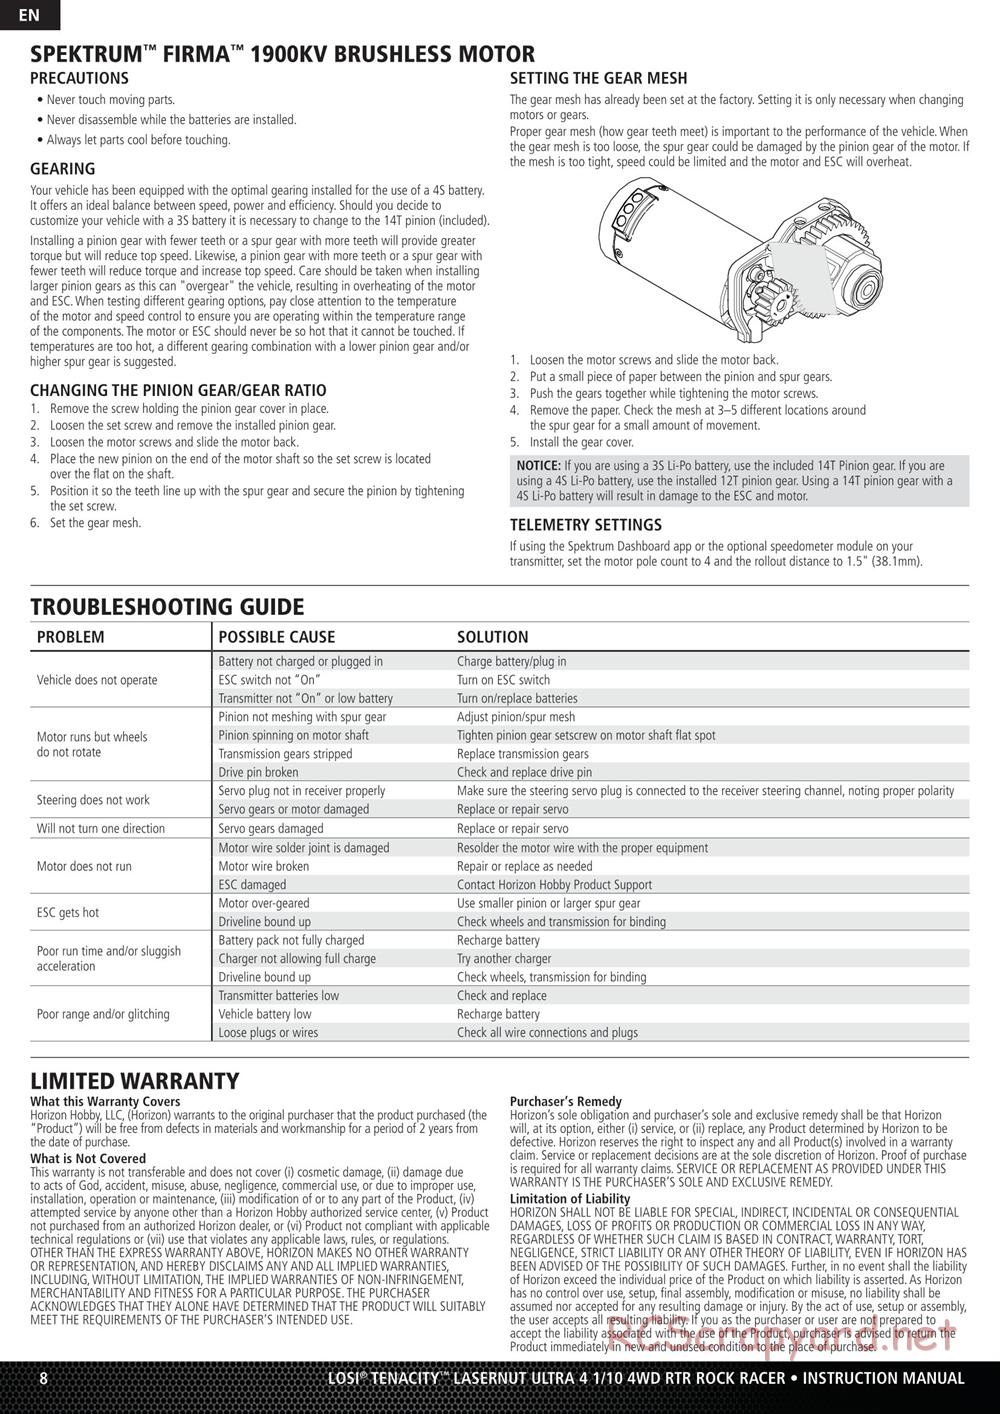 Team Losi - Lasernut U4 Rock Racer - Manual - Page 8